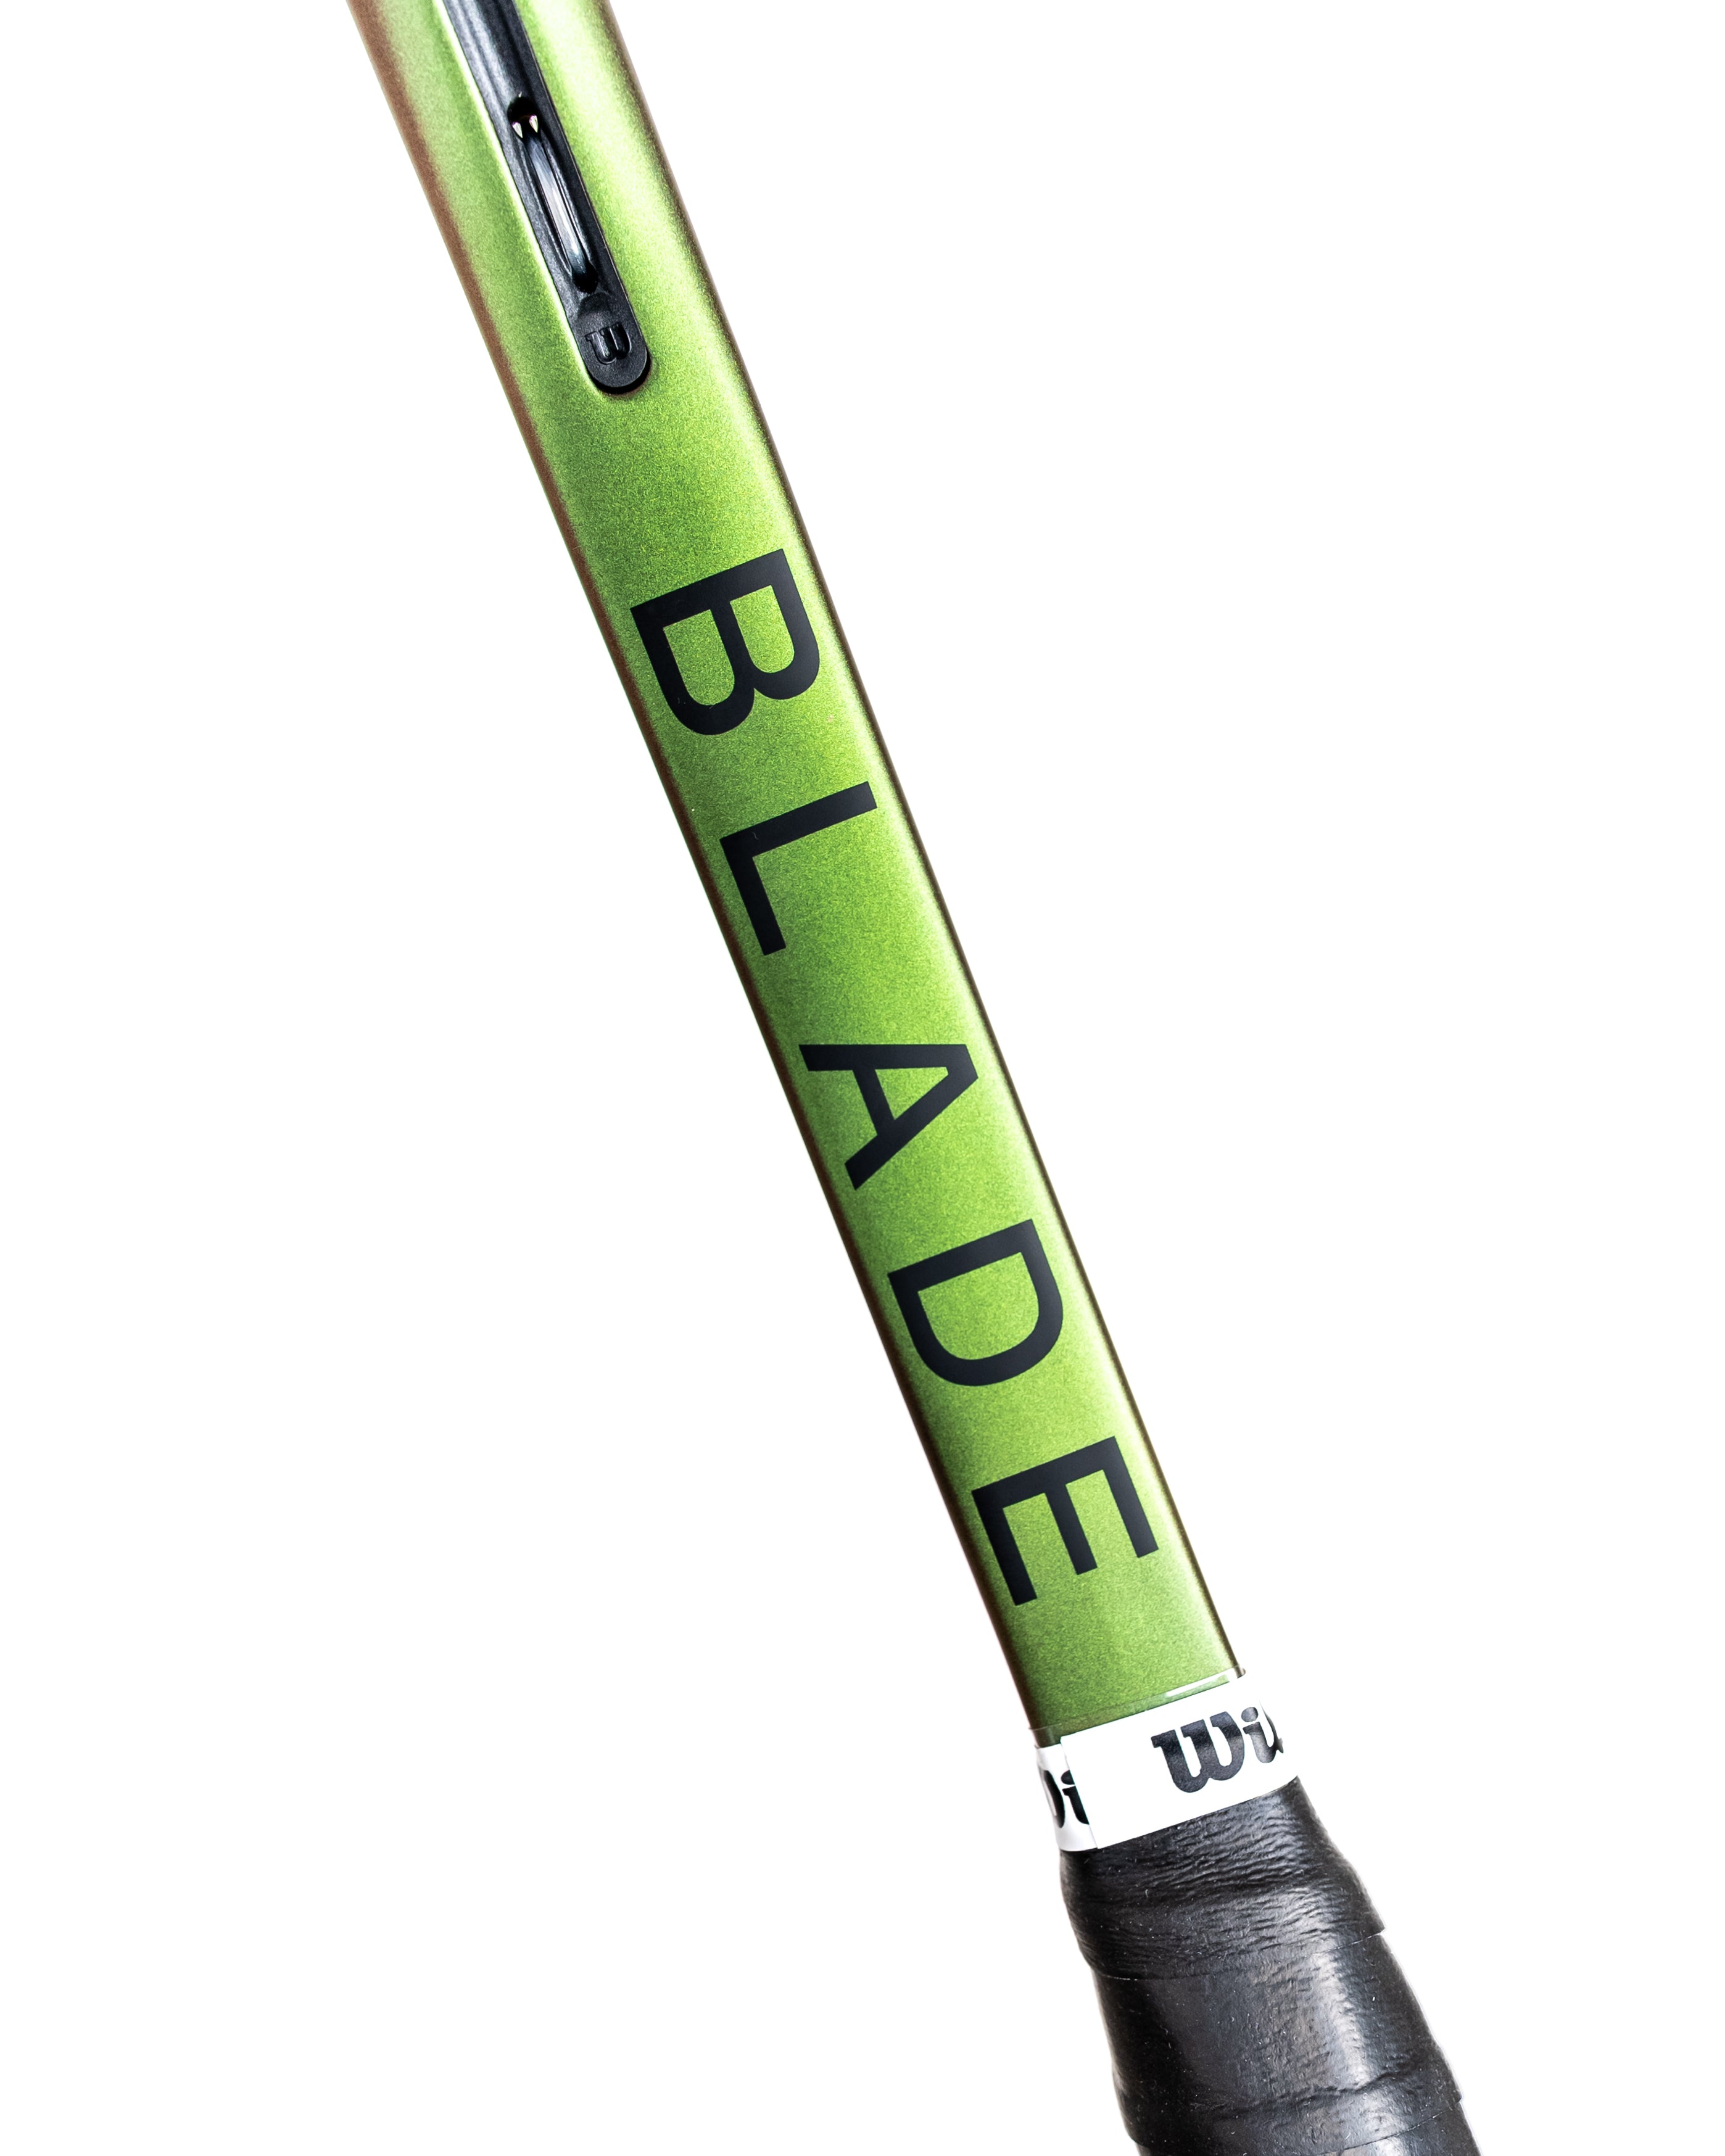 Wilson Blade 100L V8.0 Tennisketcher